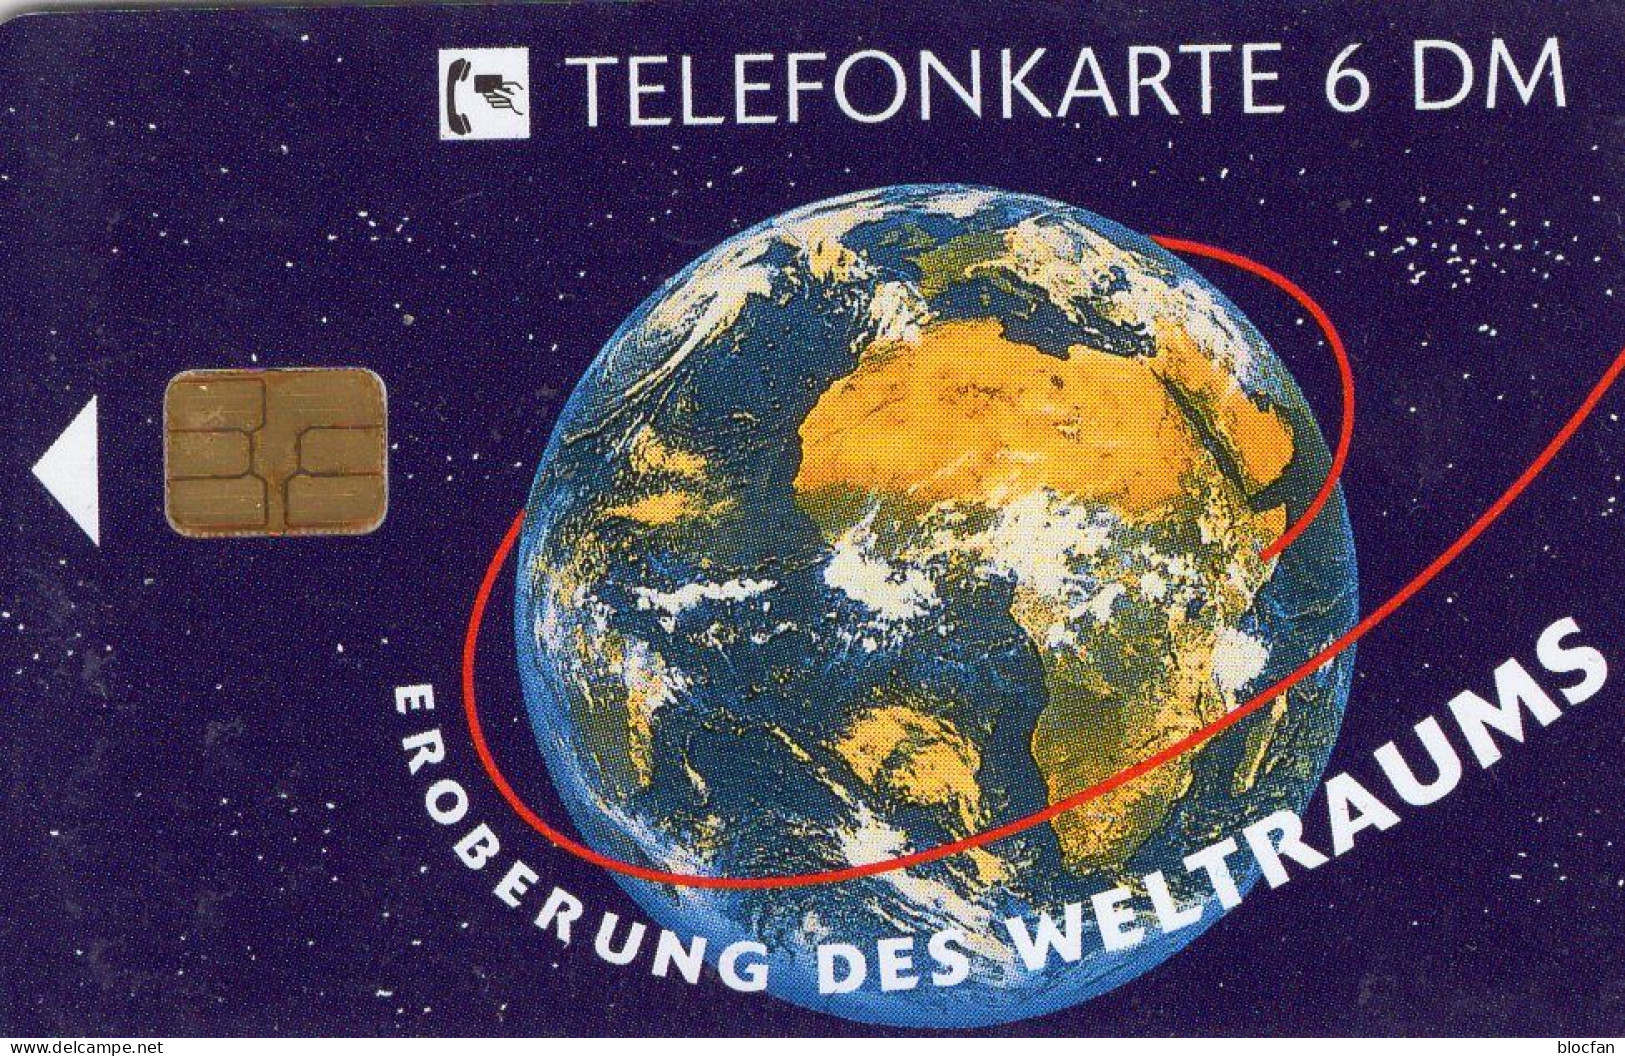 Space Center TK O 1164/1995 ** 25€ 1.000Expl. Weltraum-Programm US Raumflug Aus Cap Kennedy TC NASA Phonecard Of Germany - Espacio